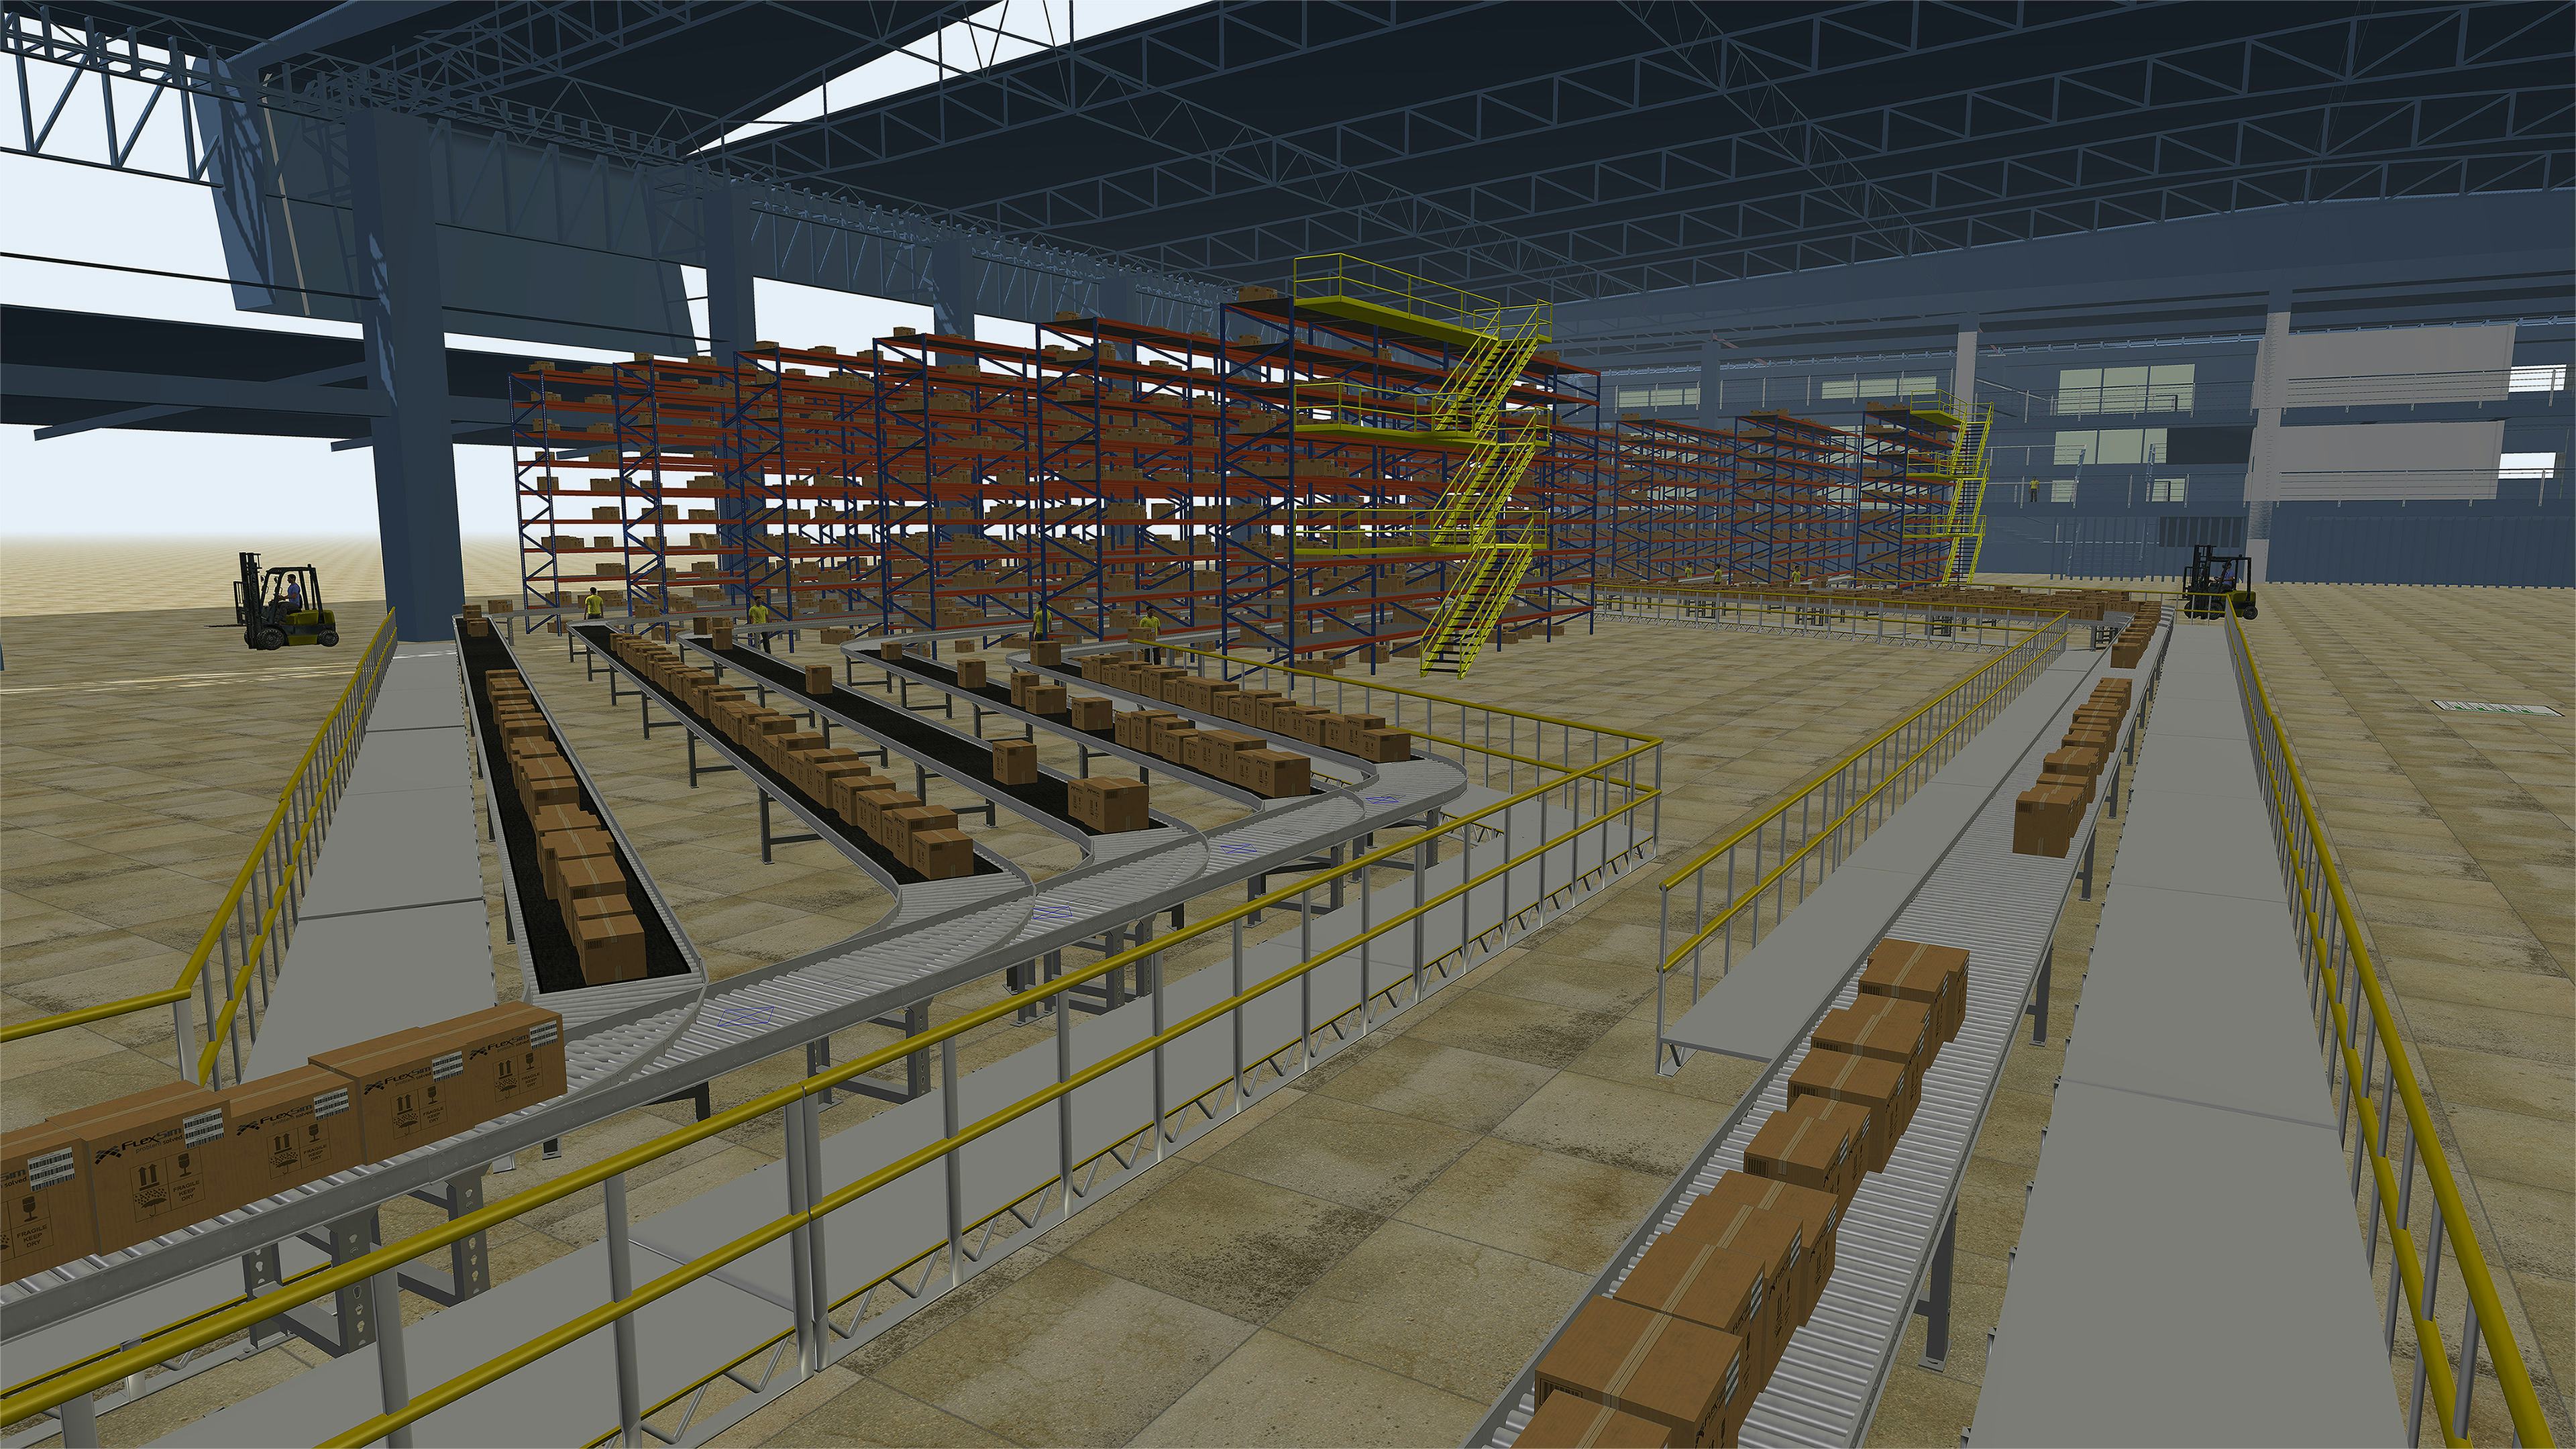 FlexSim Software - A FlexSim simulation model of a warehouse.